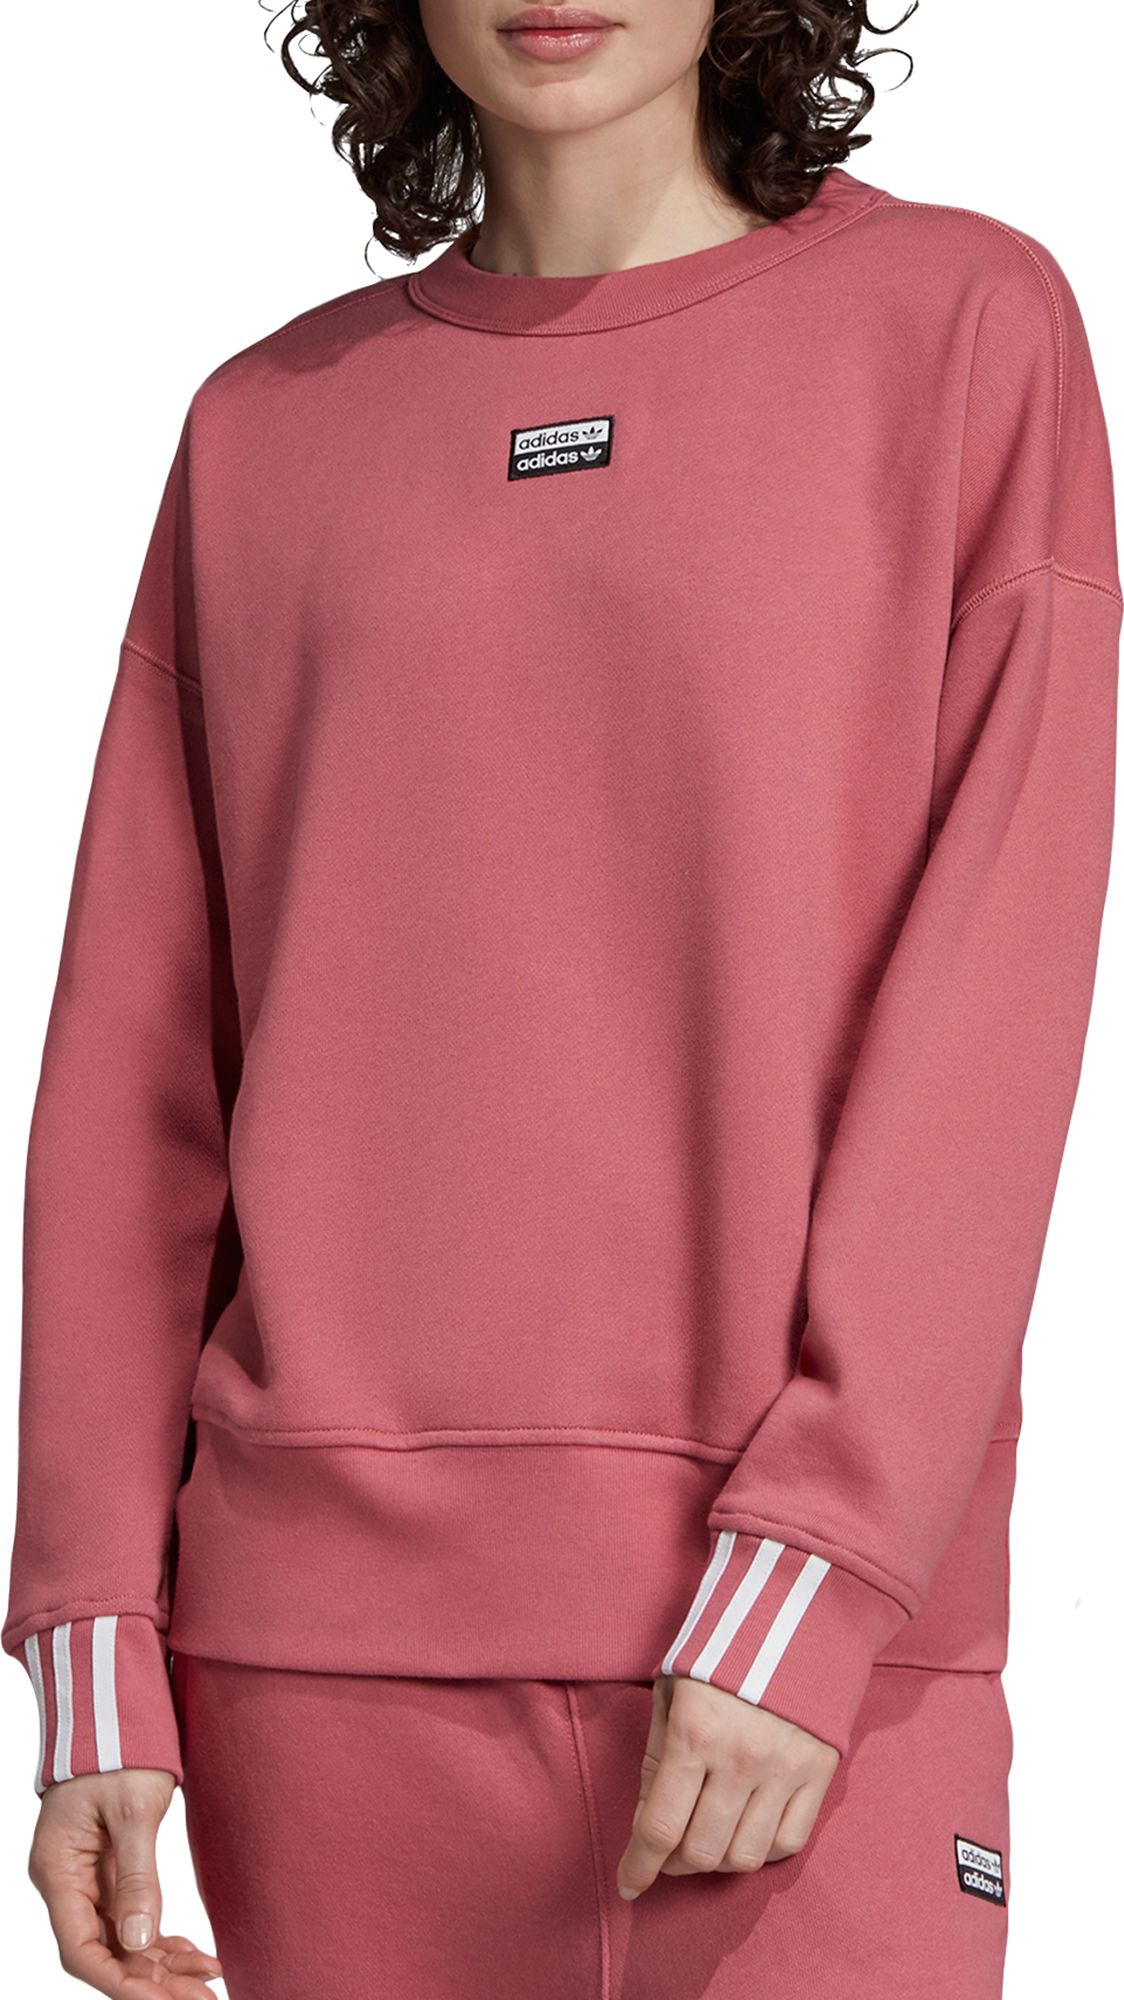 adidas originals crew neck logo sweatshirt